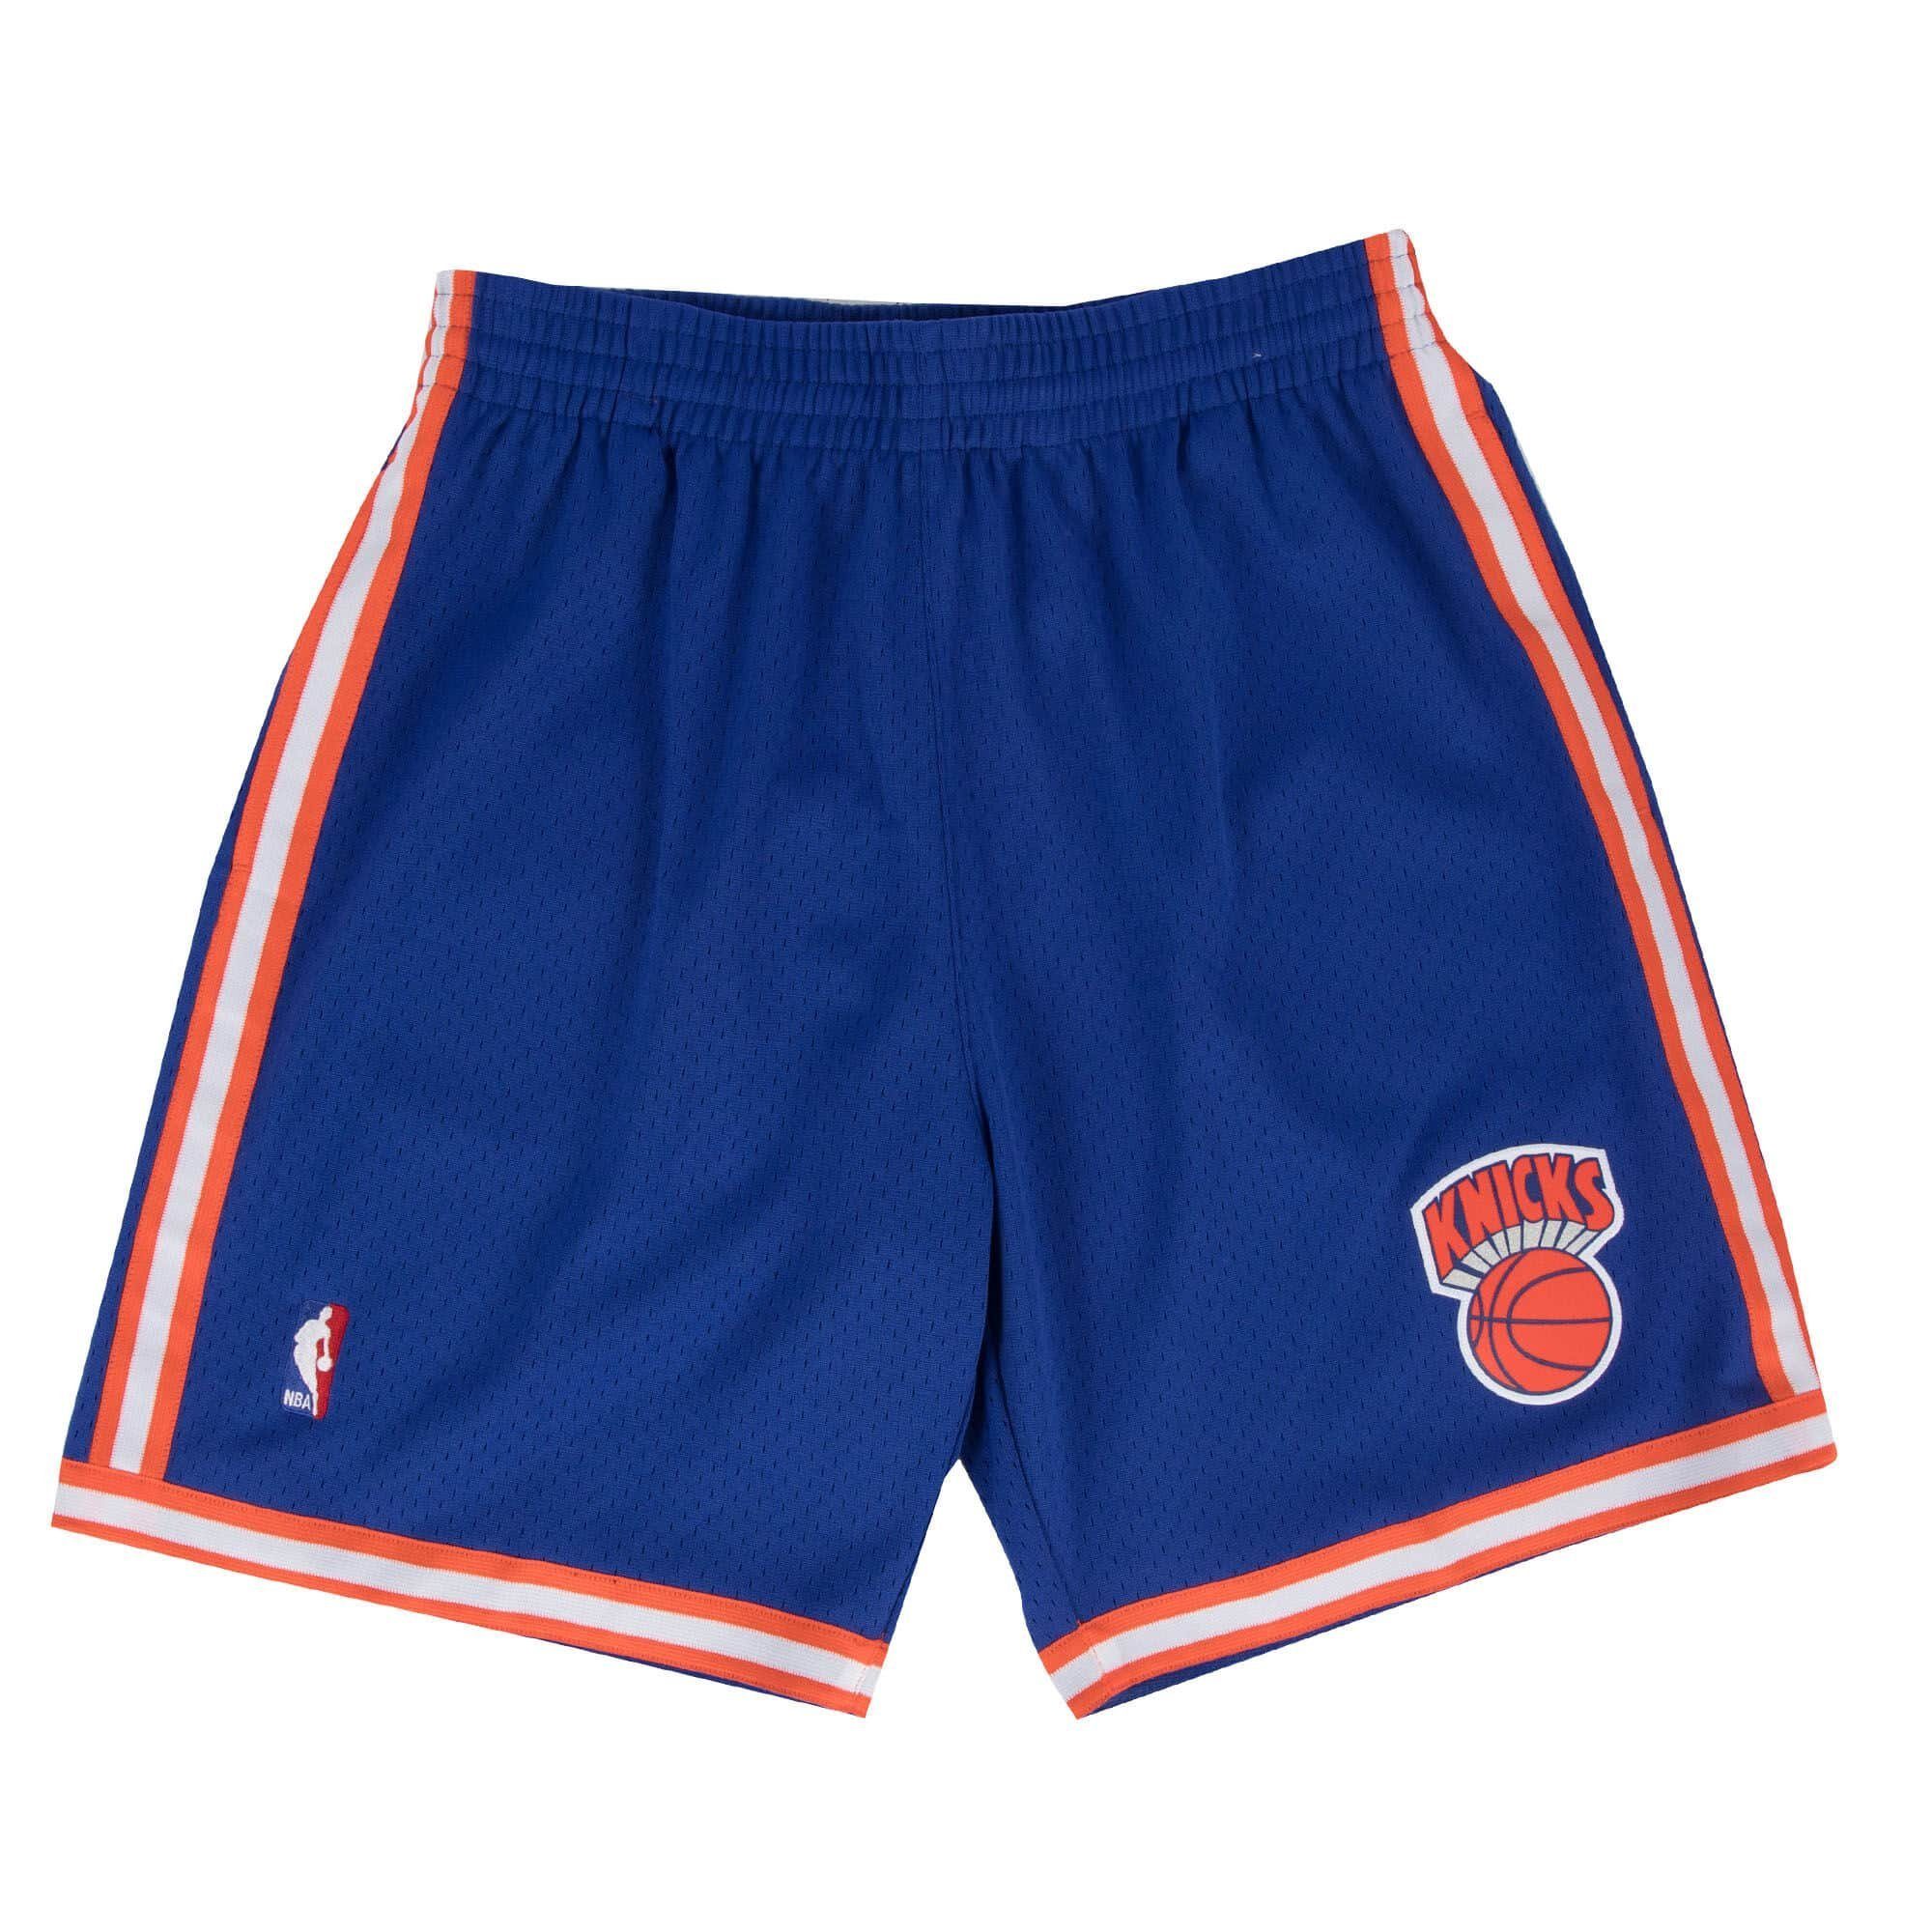 Swingman Road Mitchell New Ness Shorts Knicks York & NBA 199192